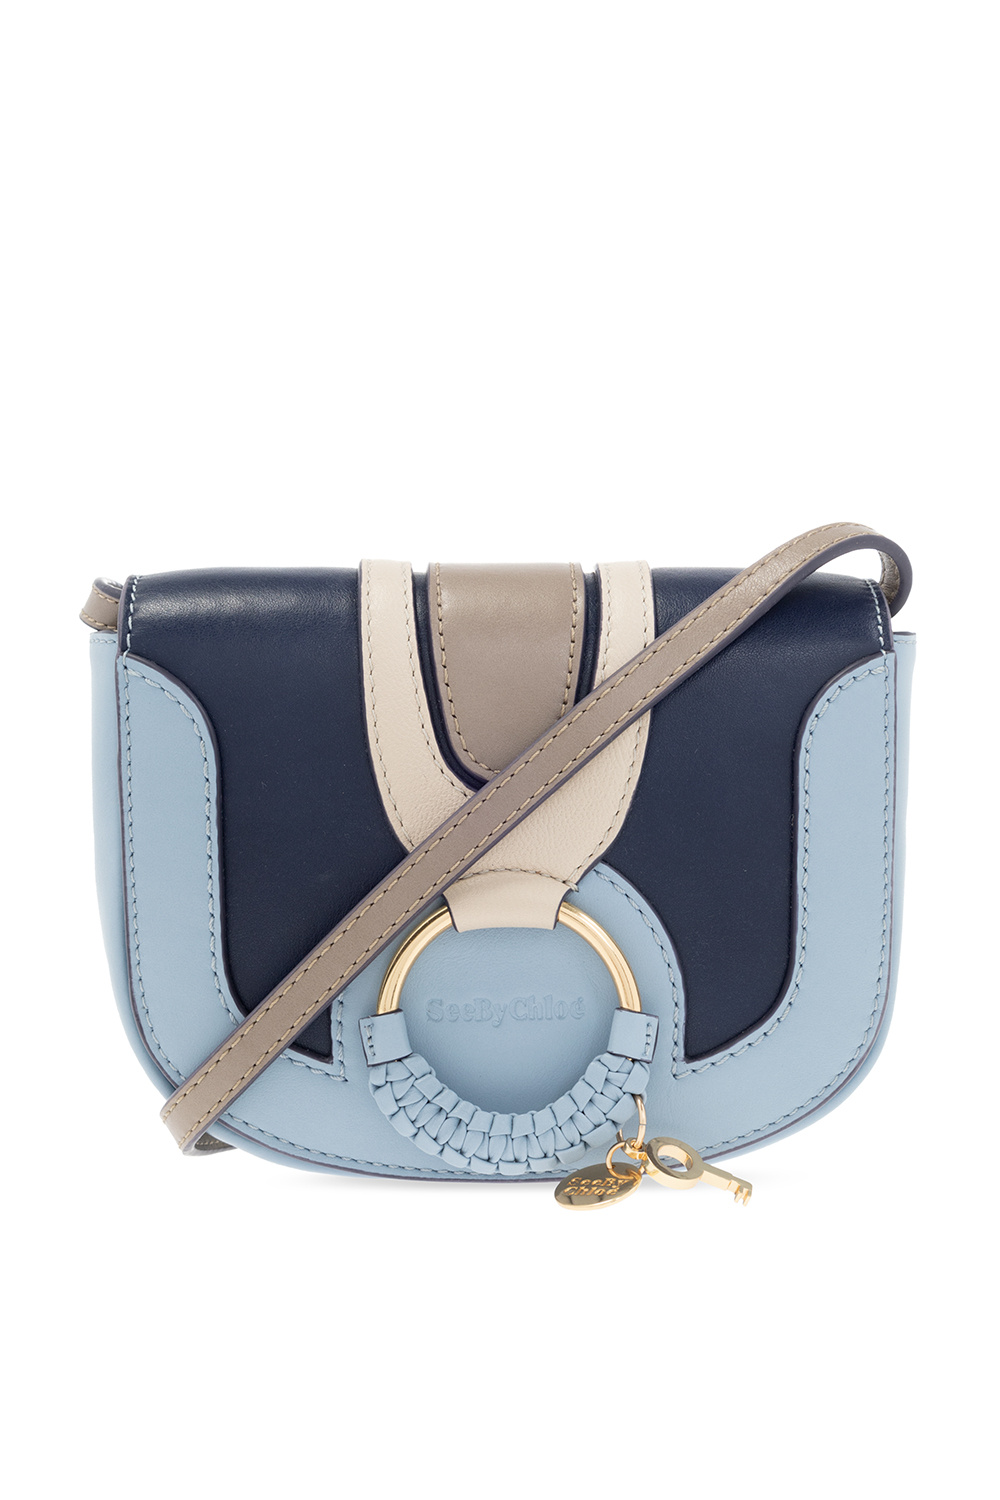 See By Chloe Shoulder Bag/purse Orange, Blue, White